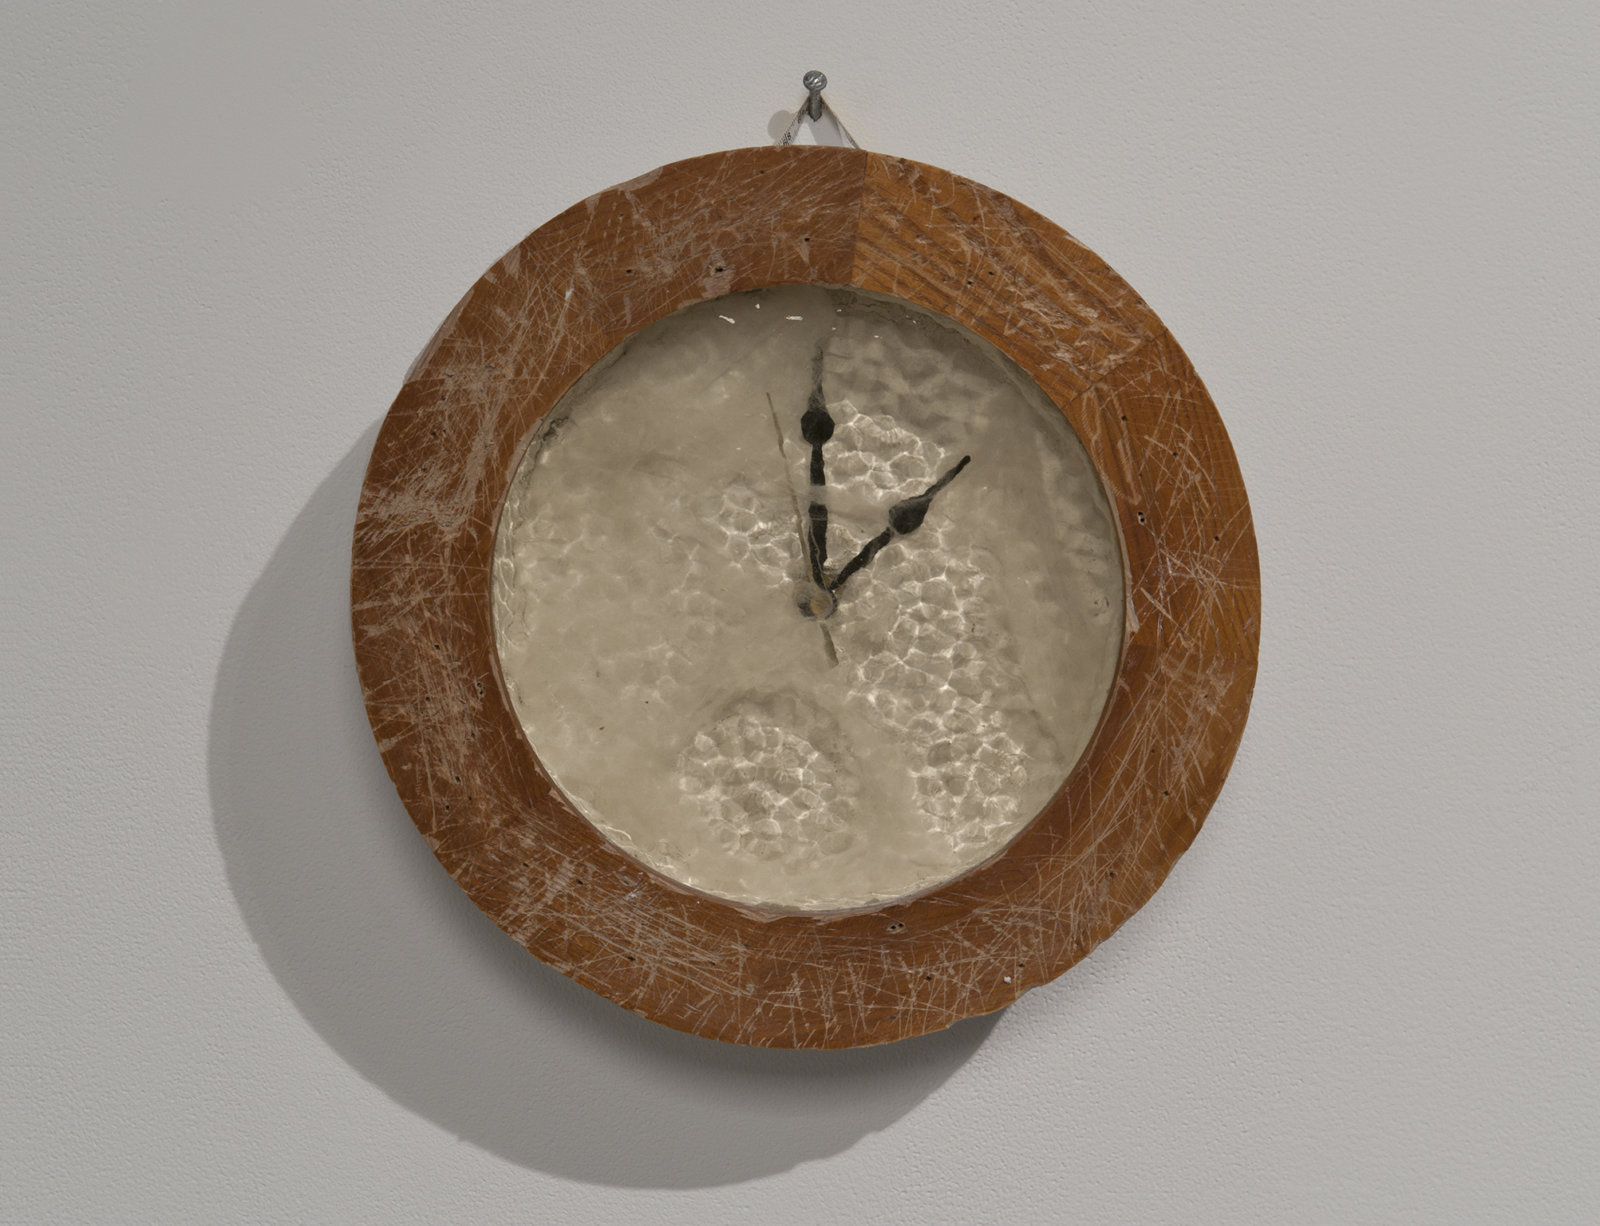 Kasper Feyrer, Antiqued/Muffled (The Crypt), 2012, english muffle antique veil glass, wood, fake cobwebs, styrofoam, plaster, plastic clock hands, mothball, tape measure, quartz clock movement, 13 x 13 x 3 in. (32 x 32 x 8 cm)